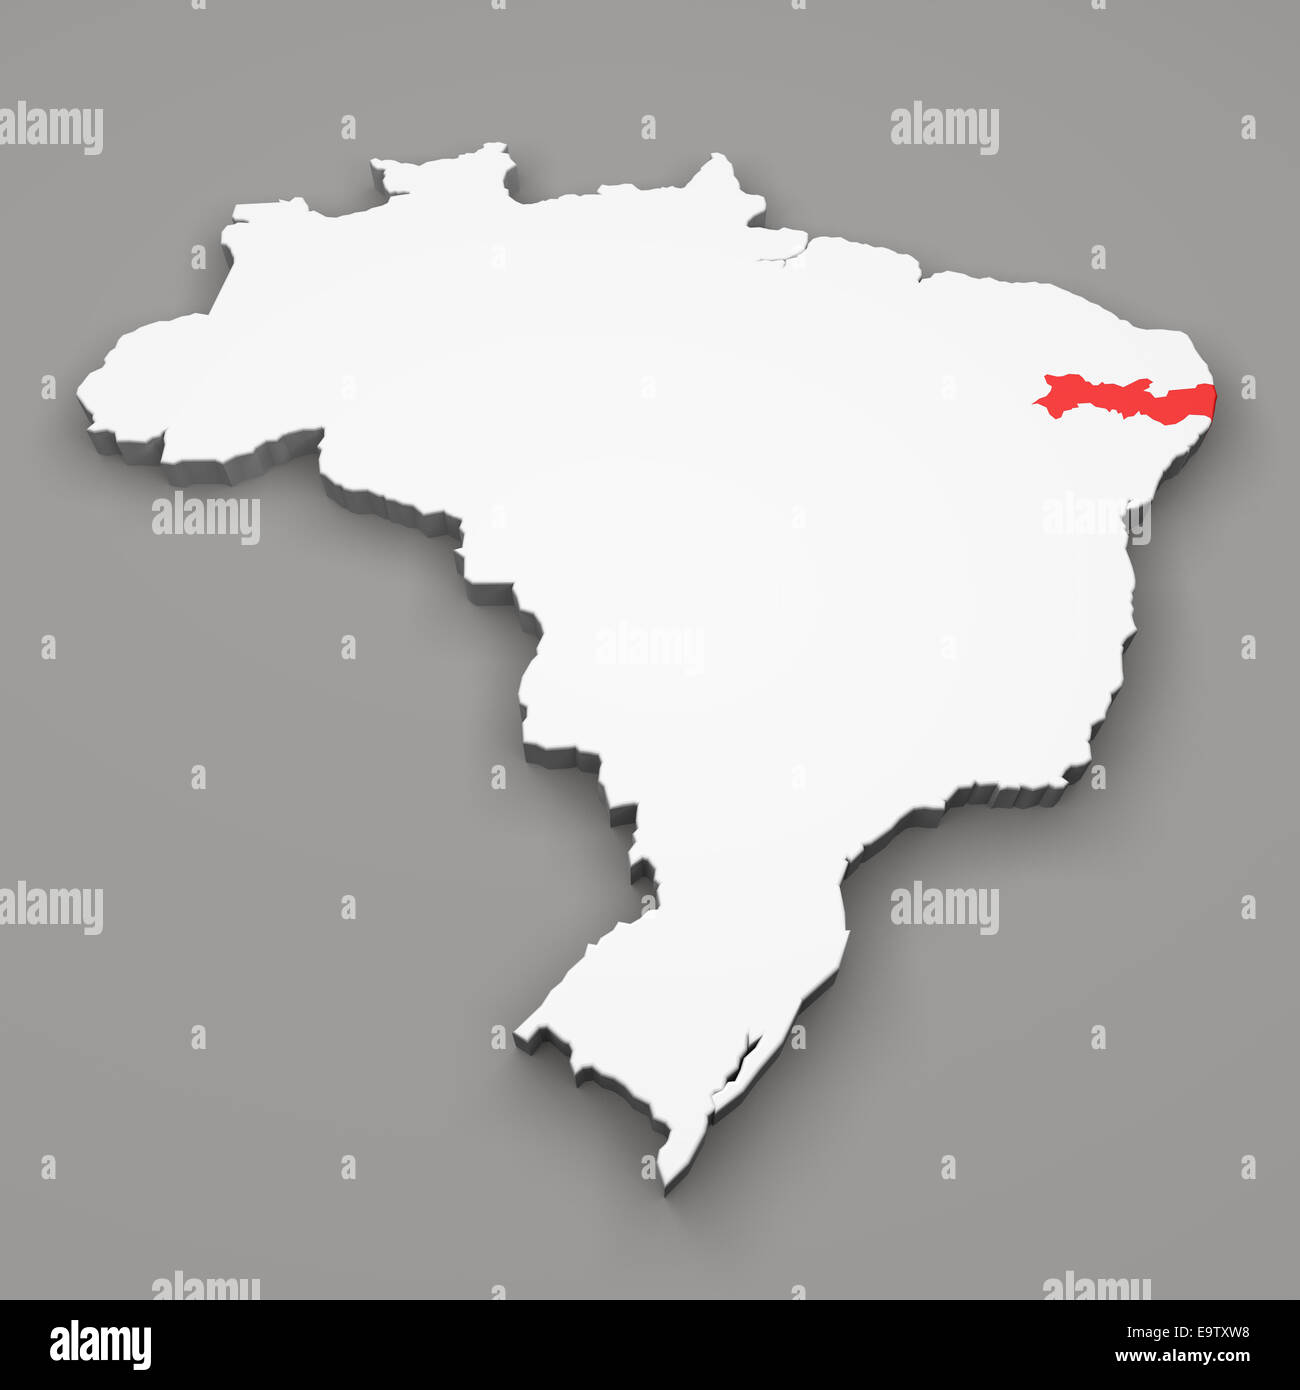 Pernambuco state on map of Brazil on gray background Stock Photo